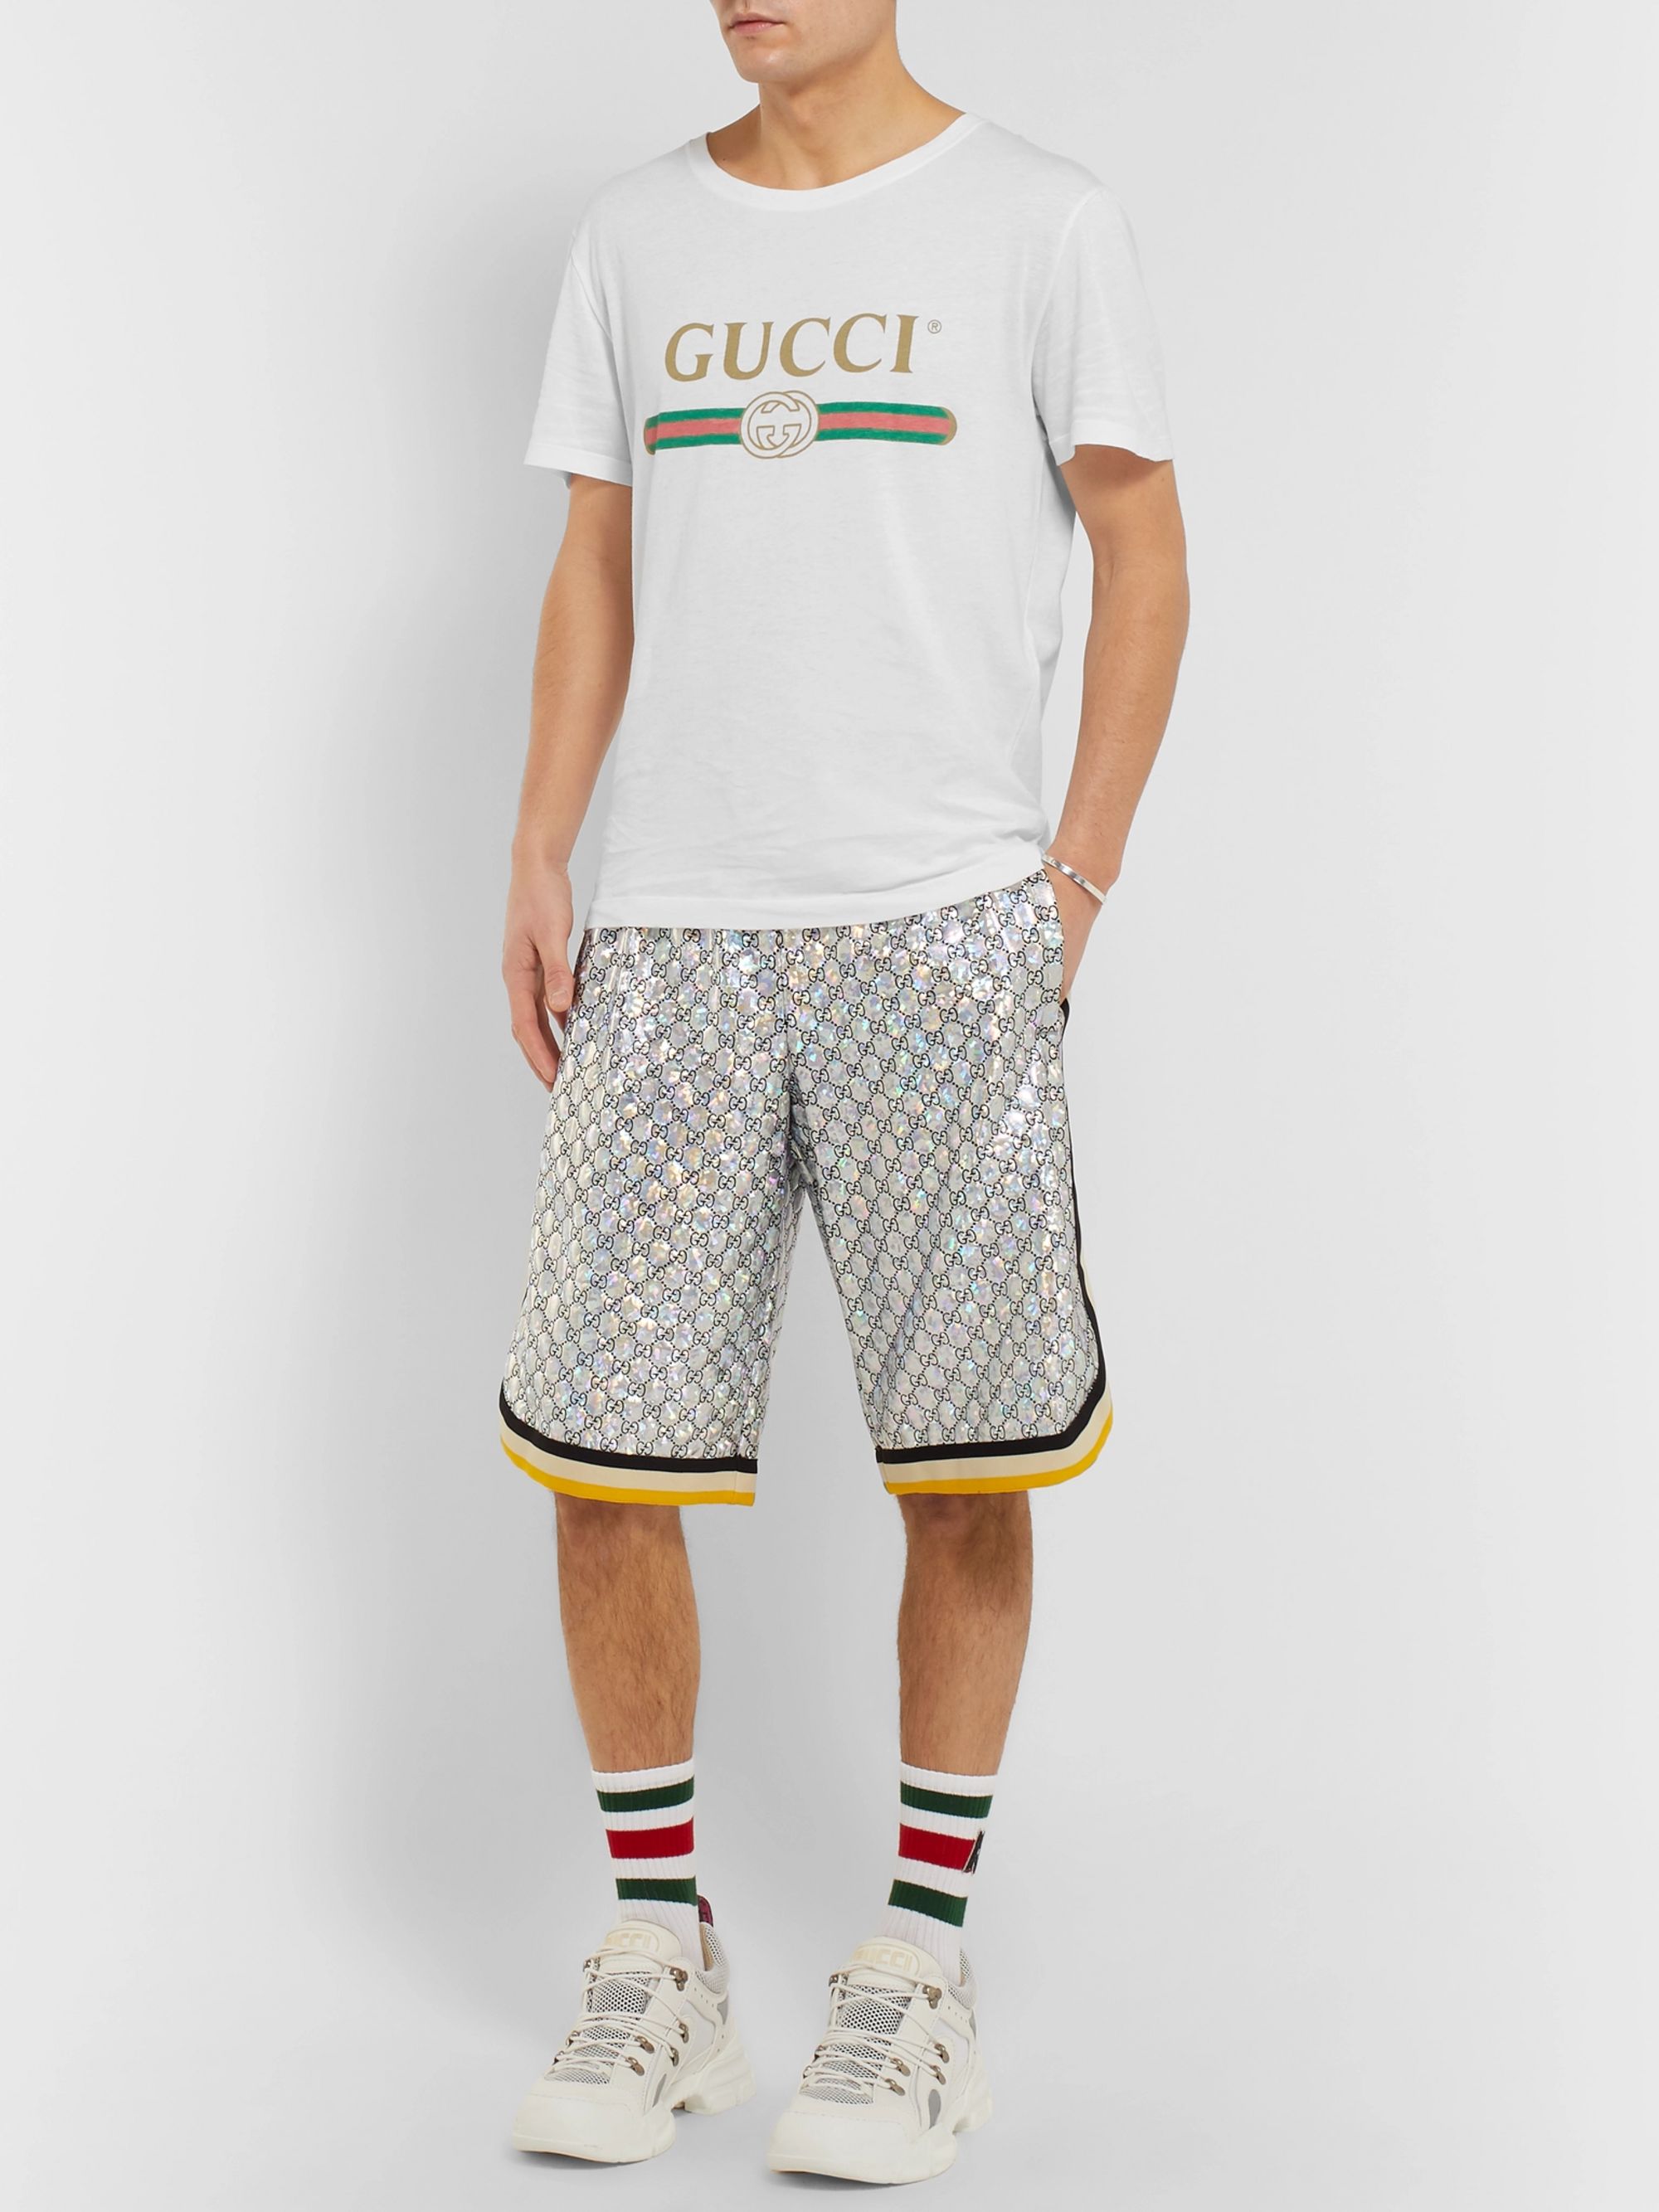 gucci shorts and top